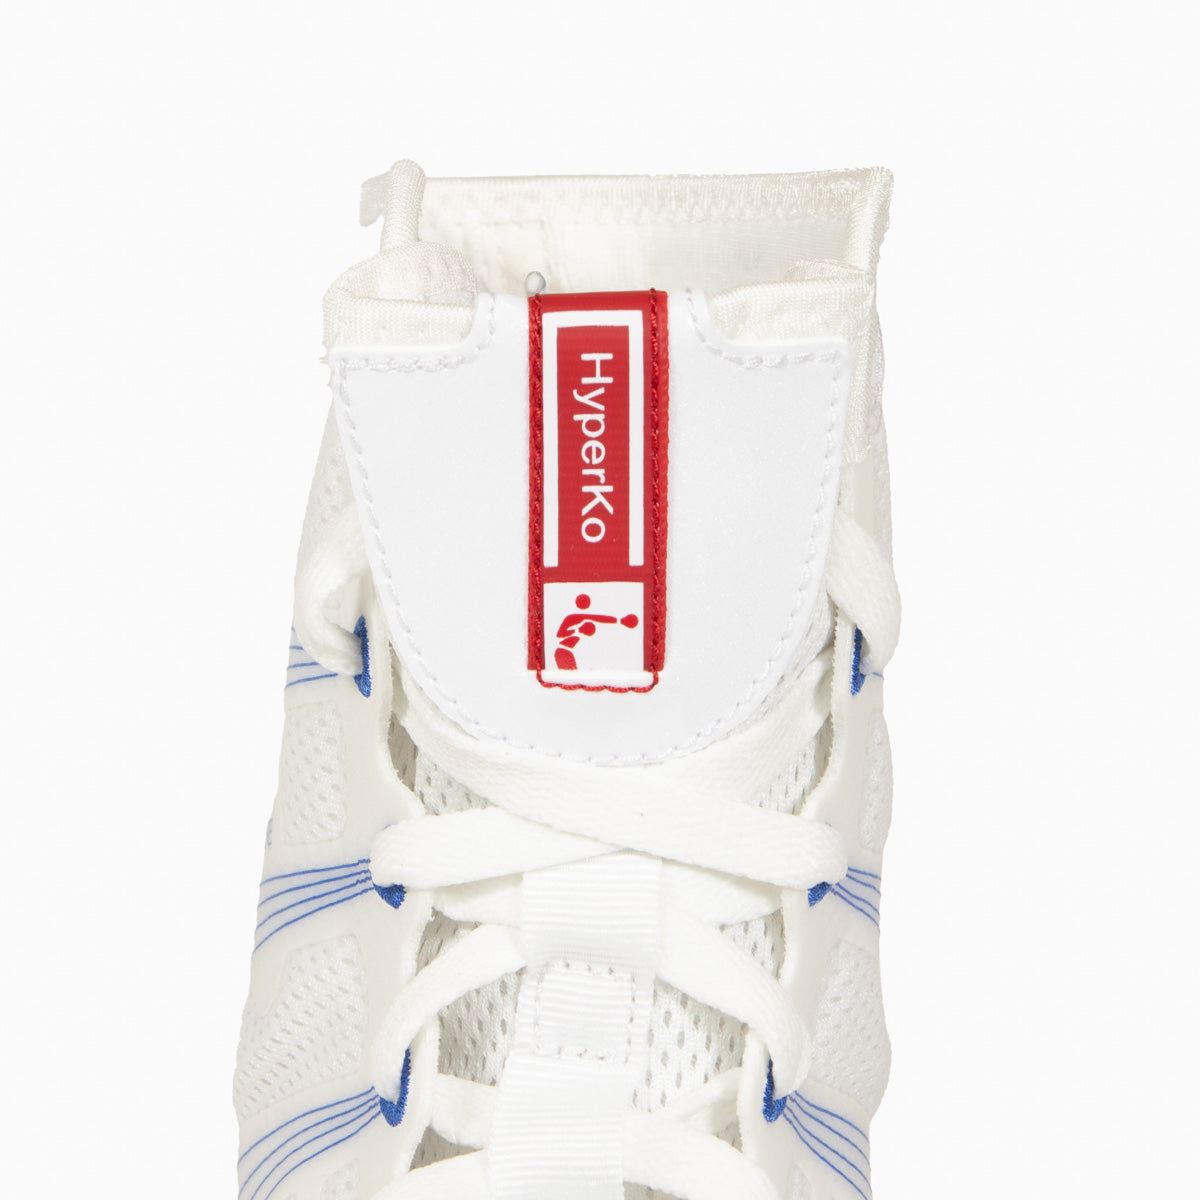 Scarpe da boxe Nike Hyperko Bianco-rosso